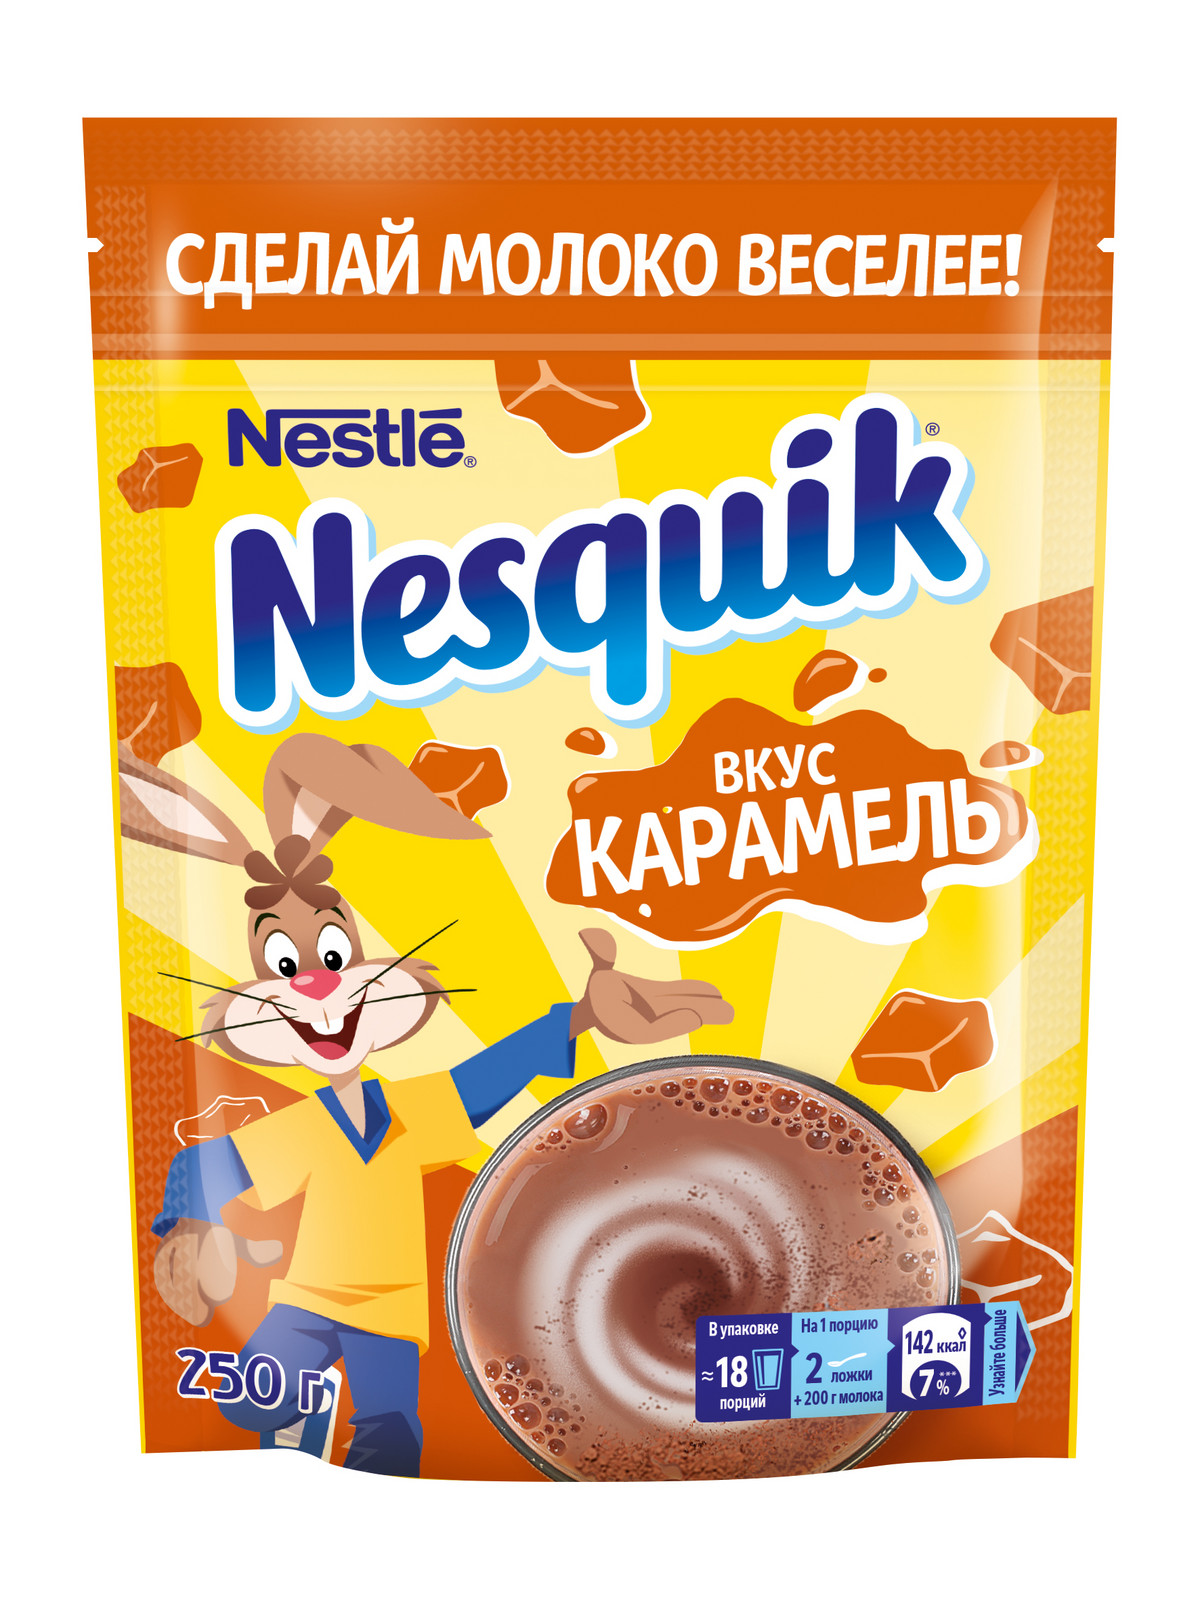 Какао-напиток  со вкусом карамели NESQUIK, Пакет 250г.